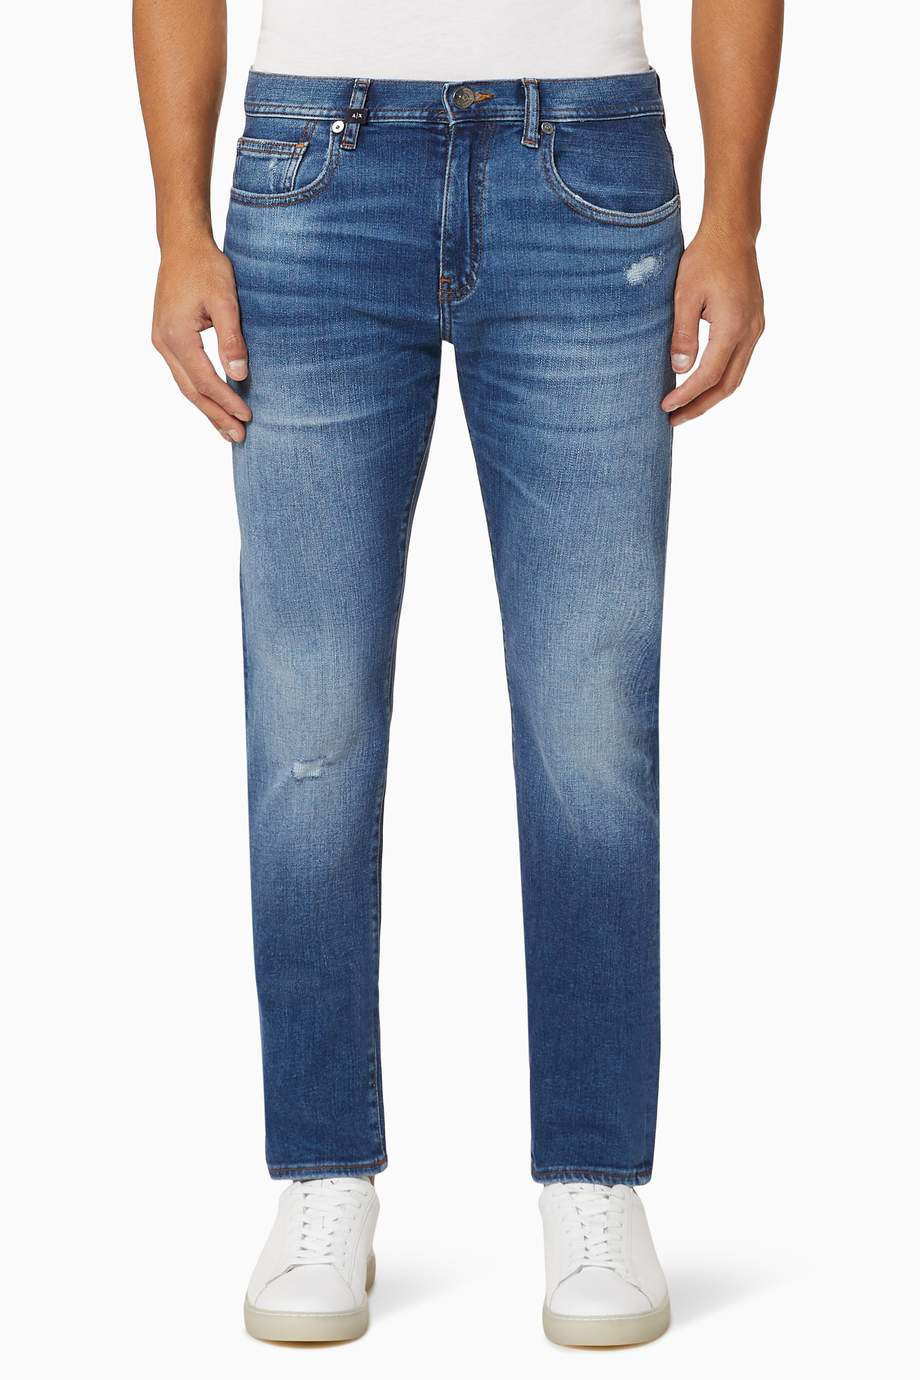 Shop Armani Exchange Blue J13 Stretch Denim Jeans for Men | Ounass UAE